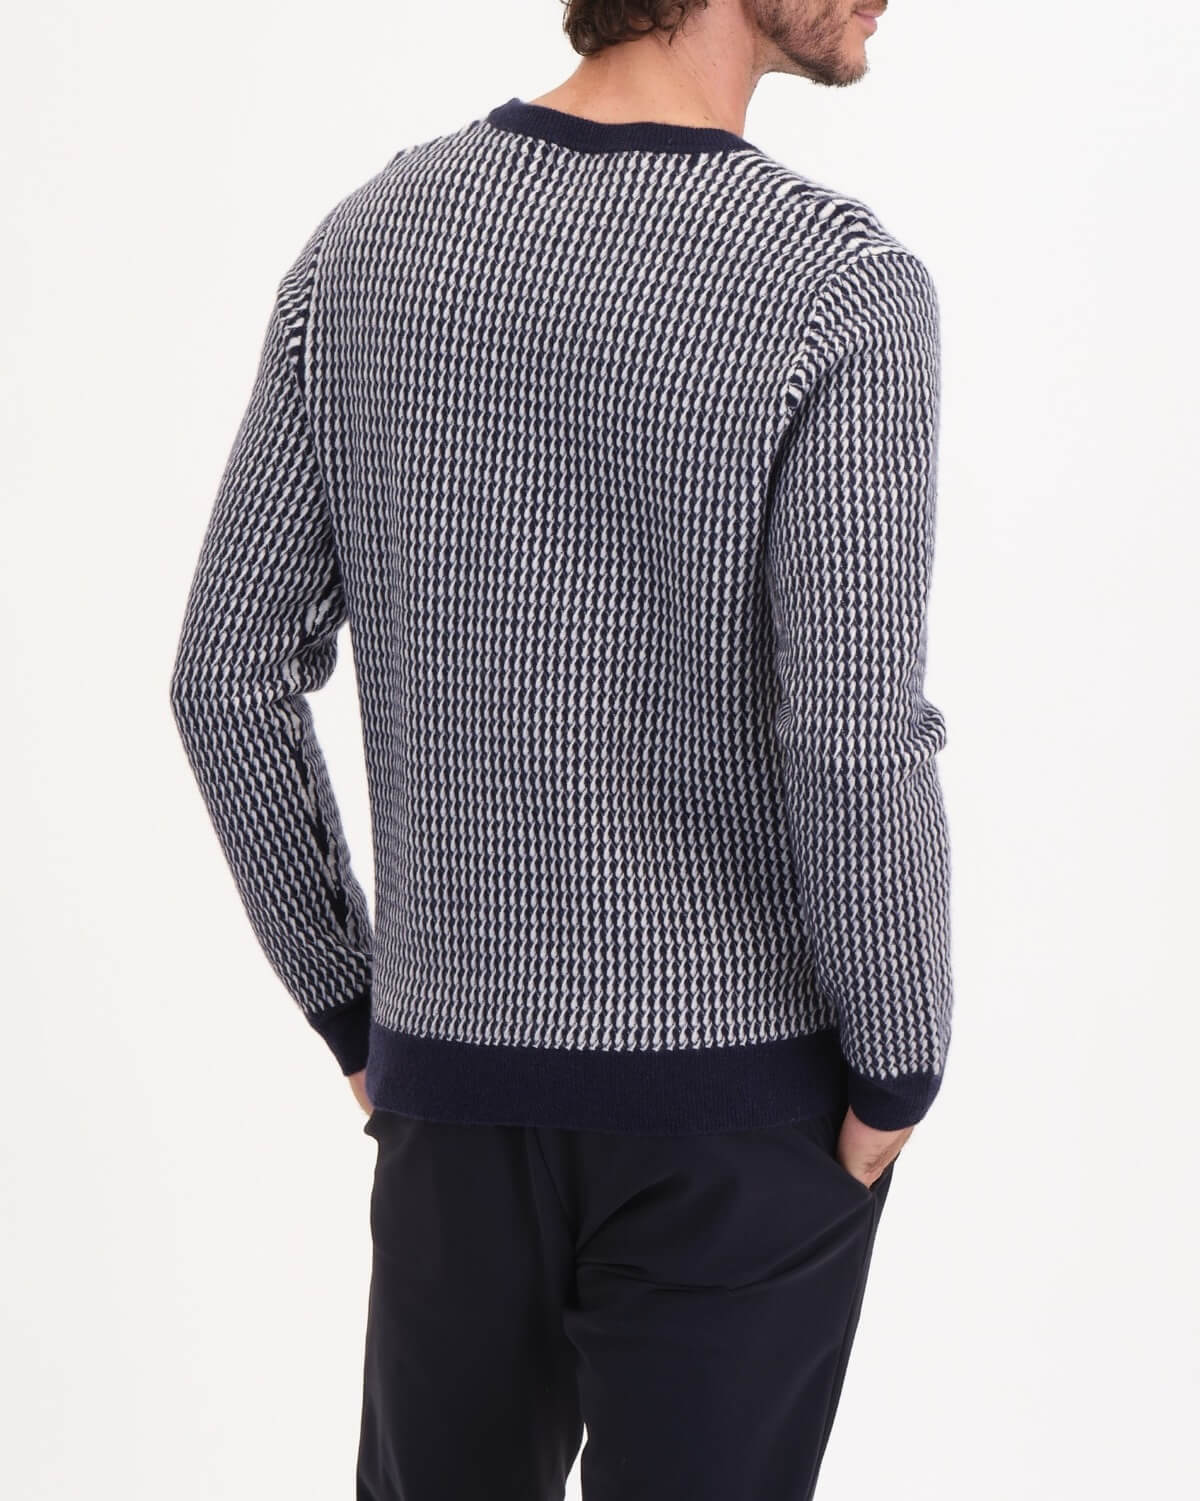 Shop Men's Cashmere Novelty Stitch Sweater| Magaschoni Men | JANE + MERCER